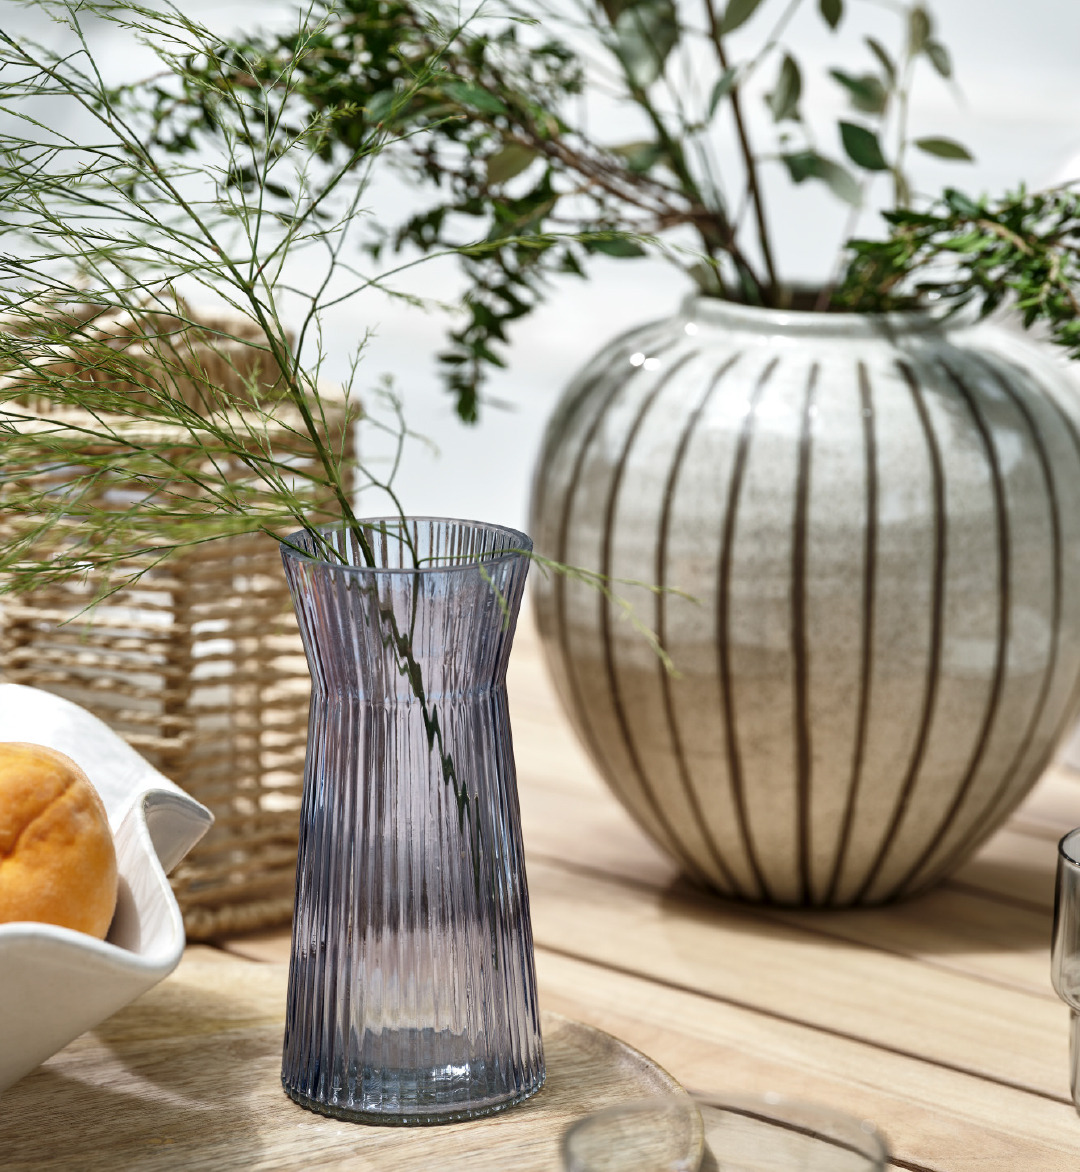 En glassvase og en stripete vase på et hagebord